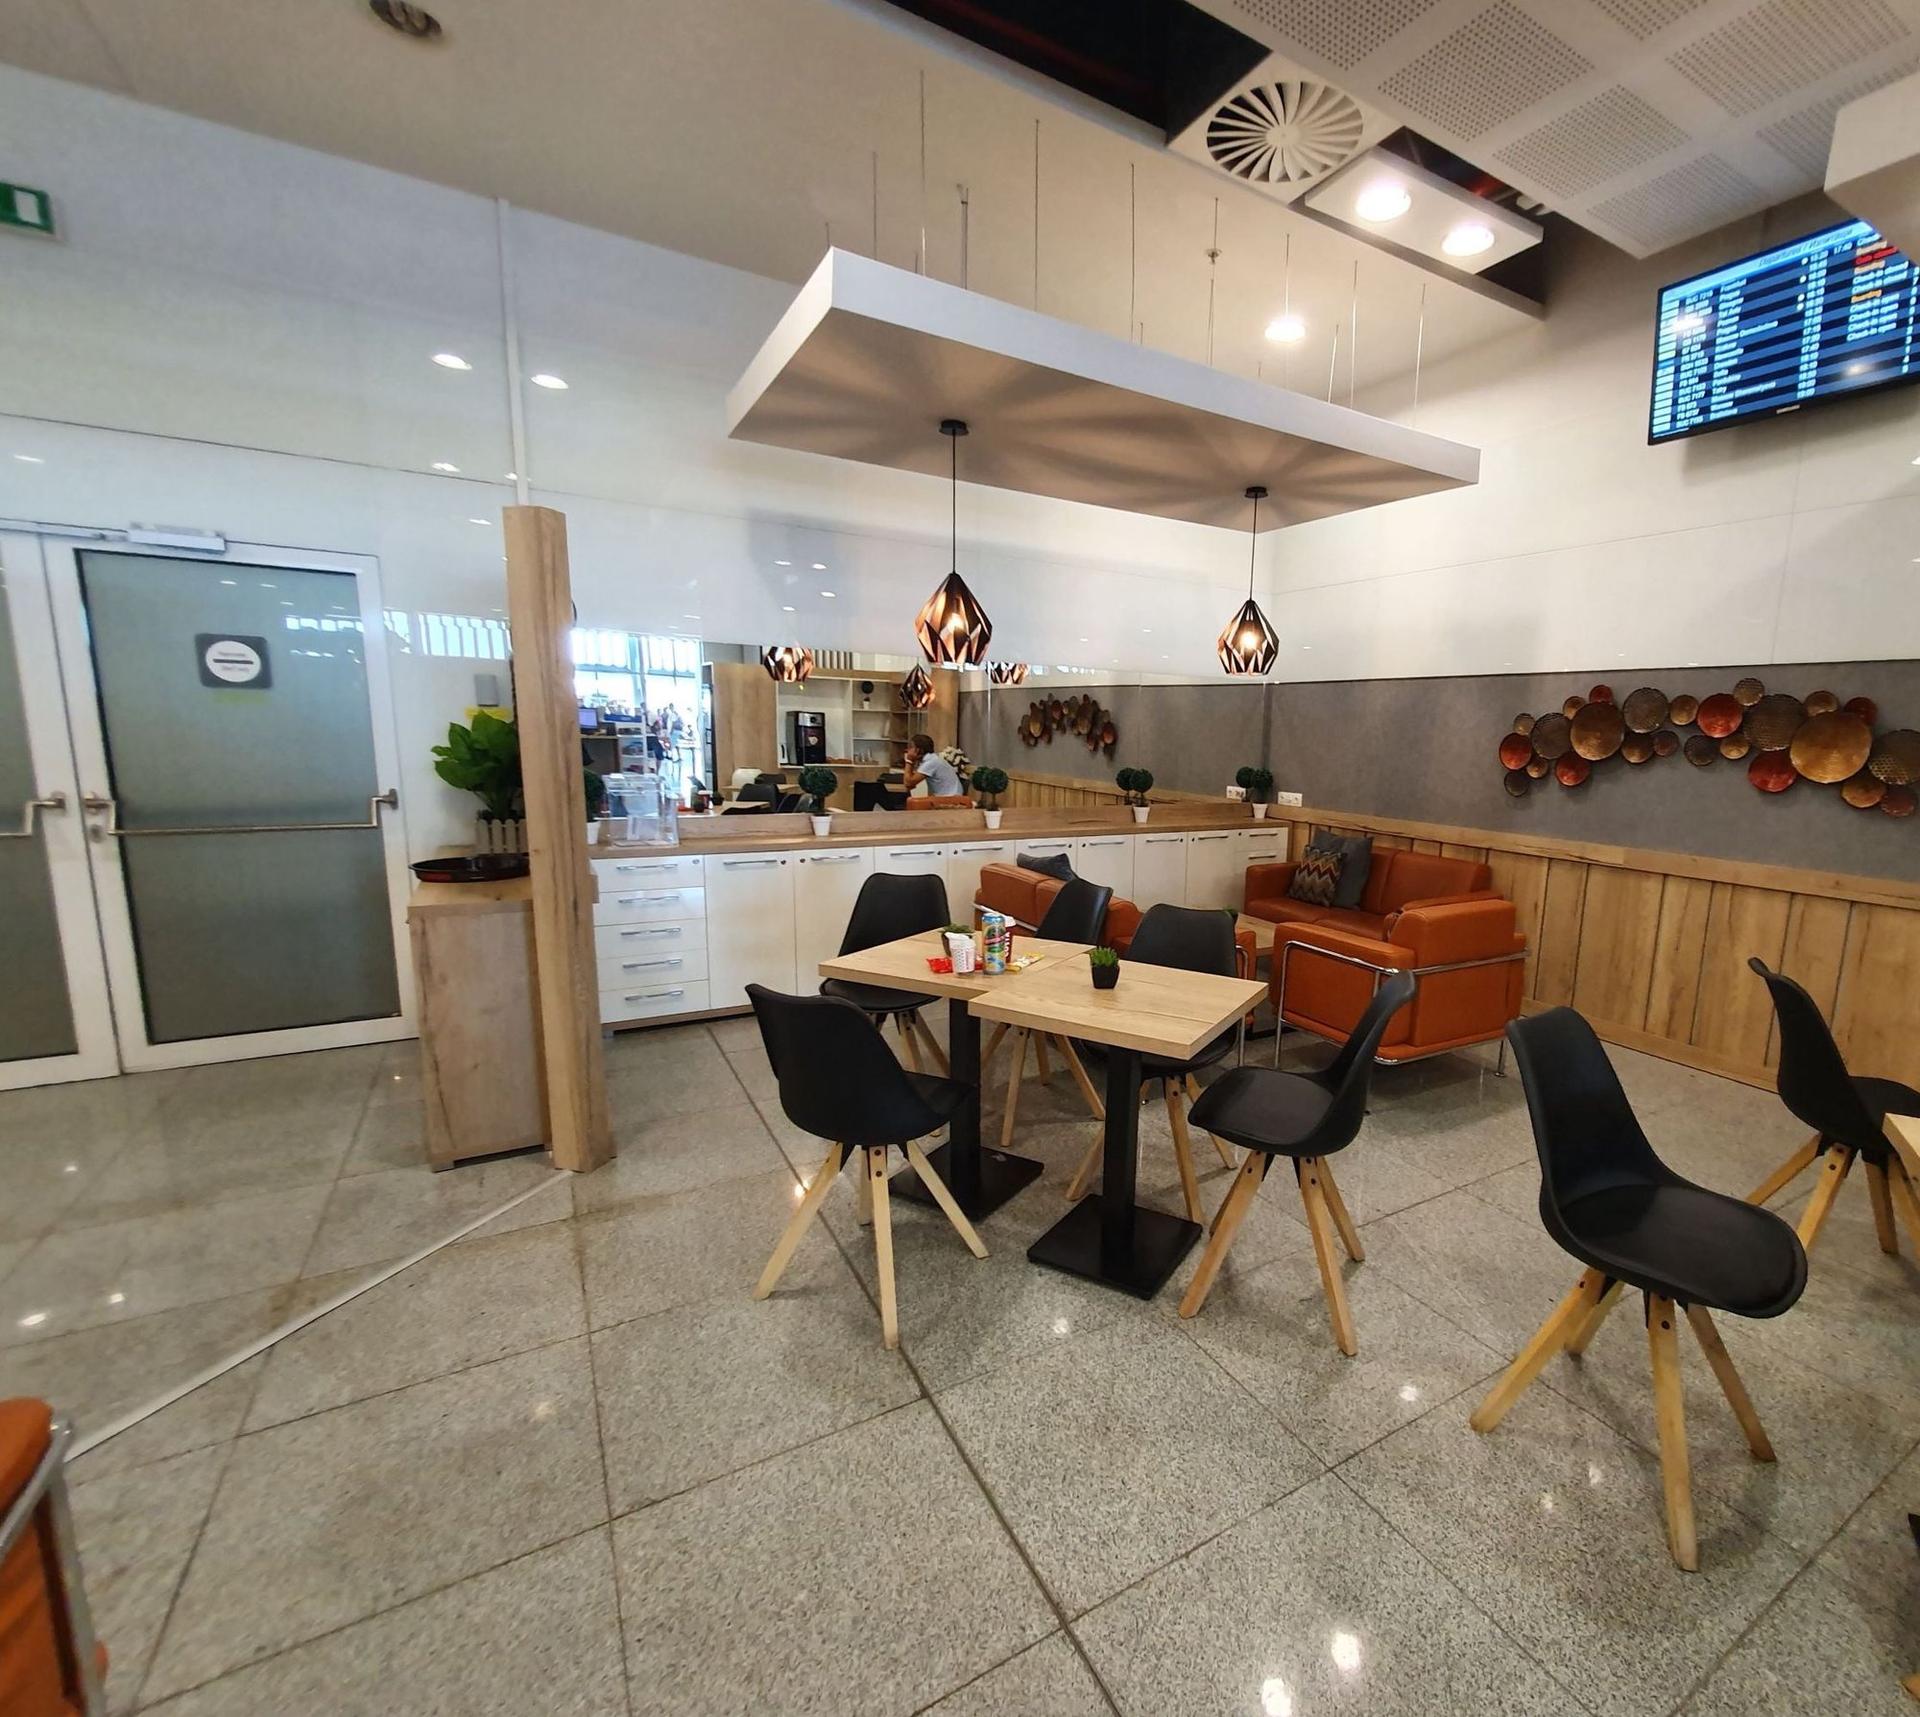 Burgas Airport Lounge image 31 of 43